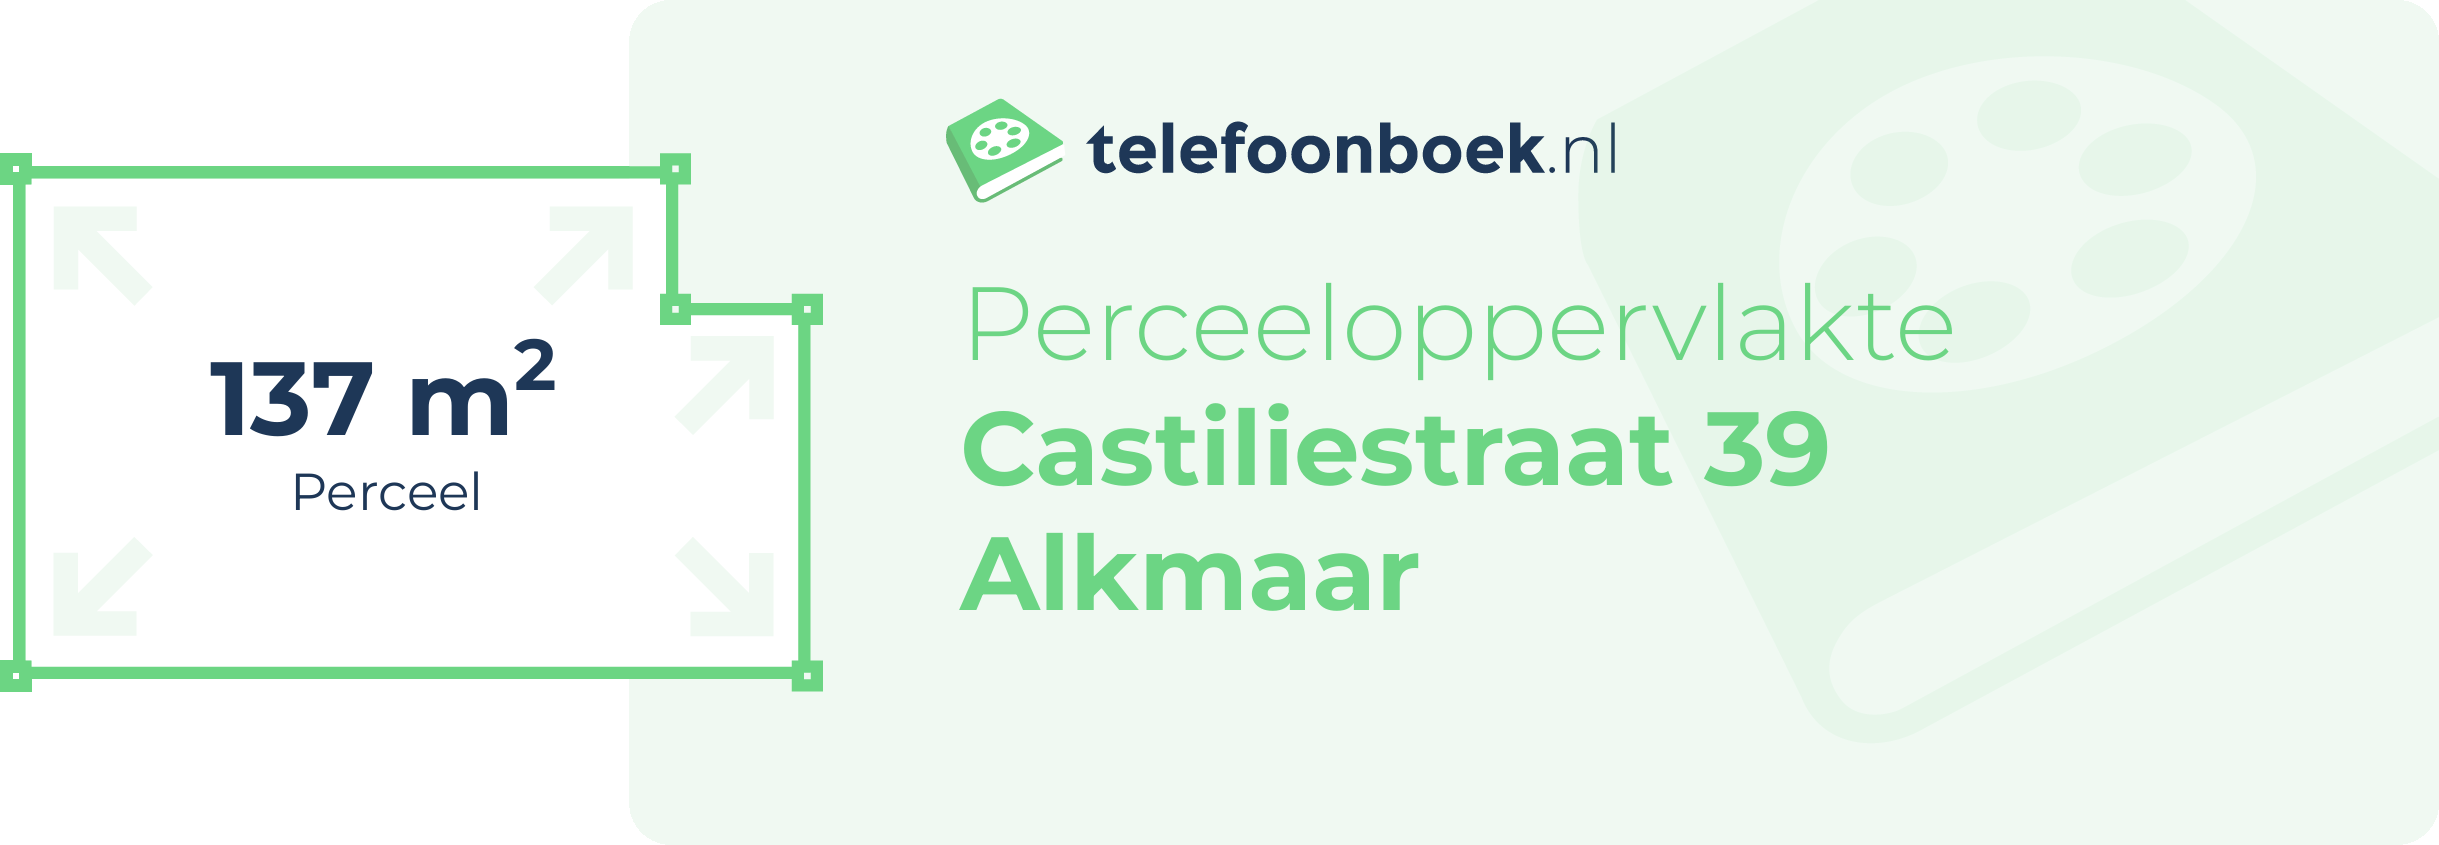 Perceeloppervlakte Castiliestraat 39 Alkmaar